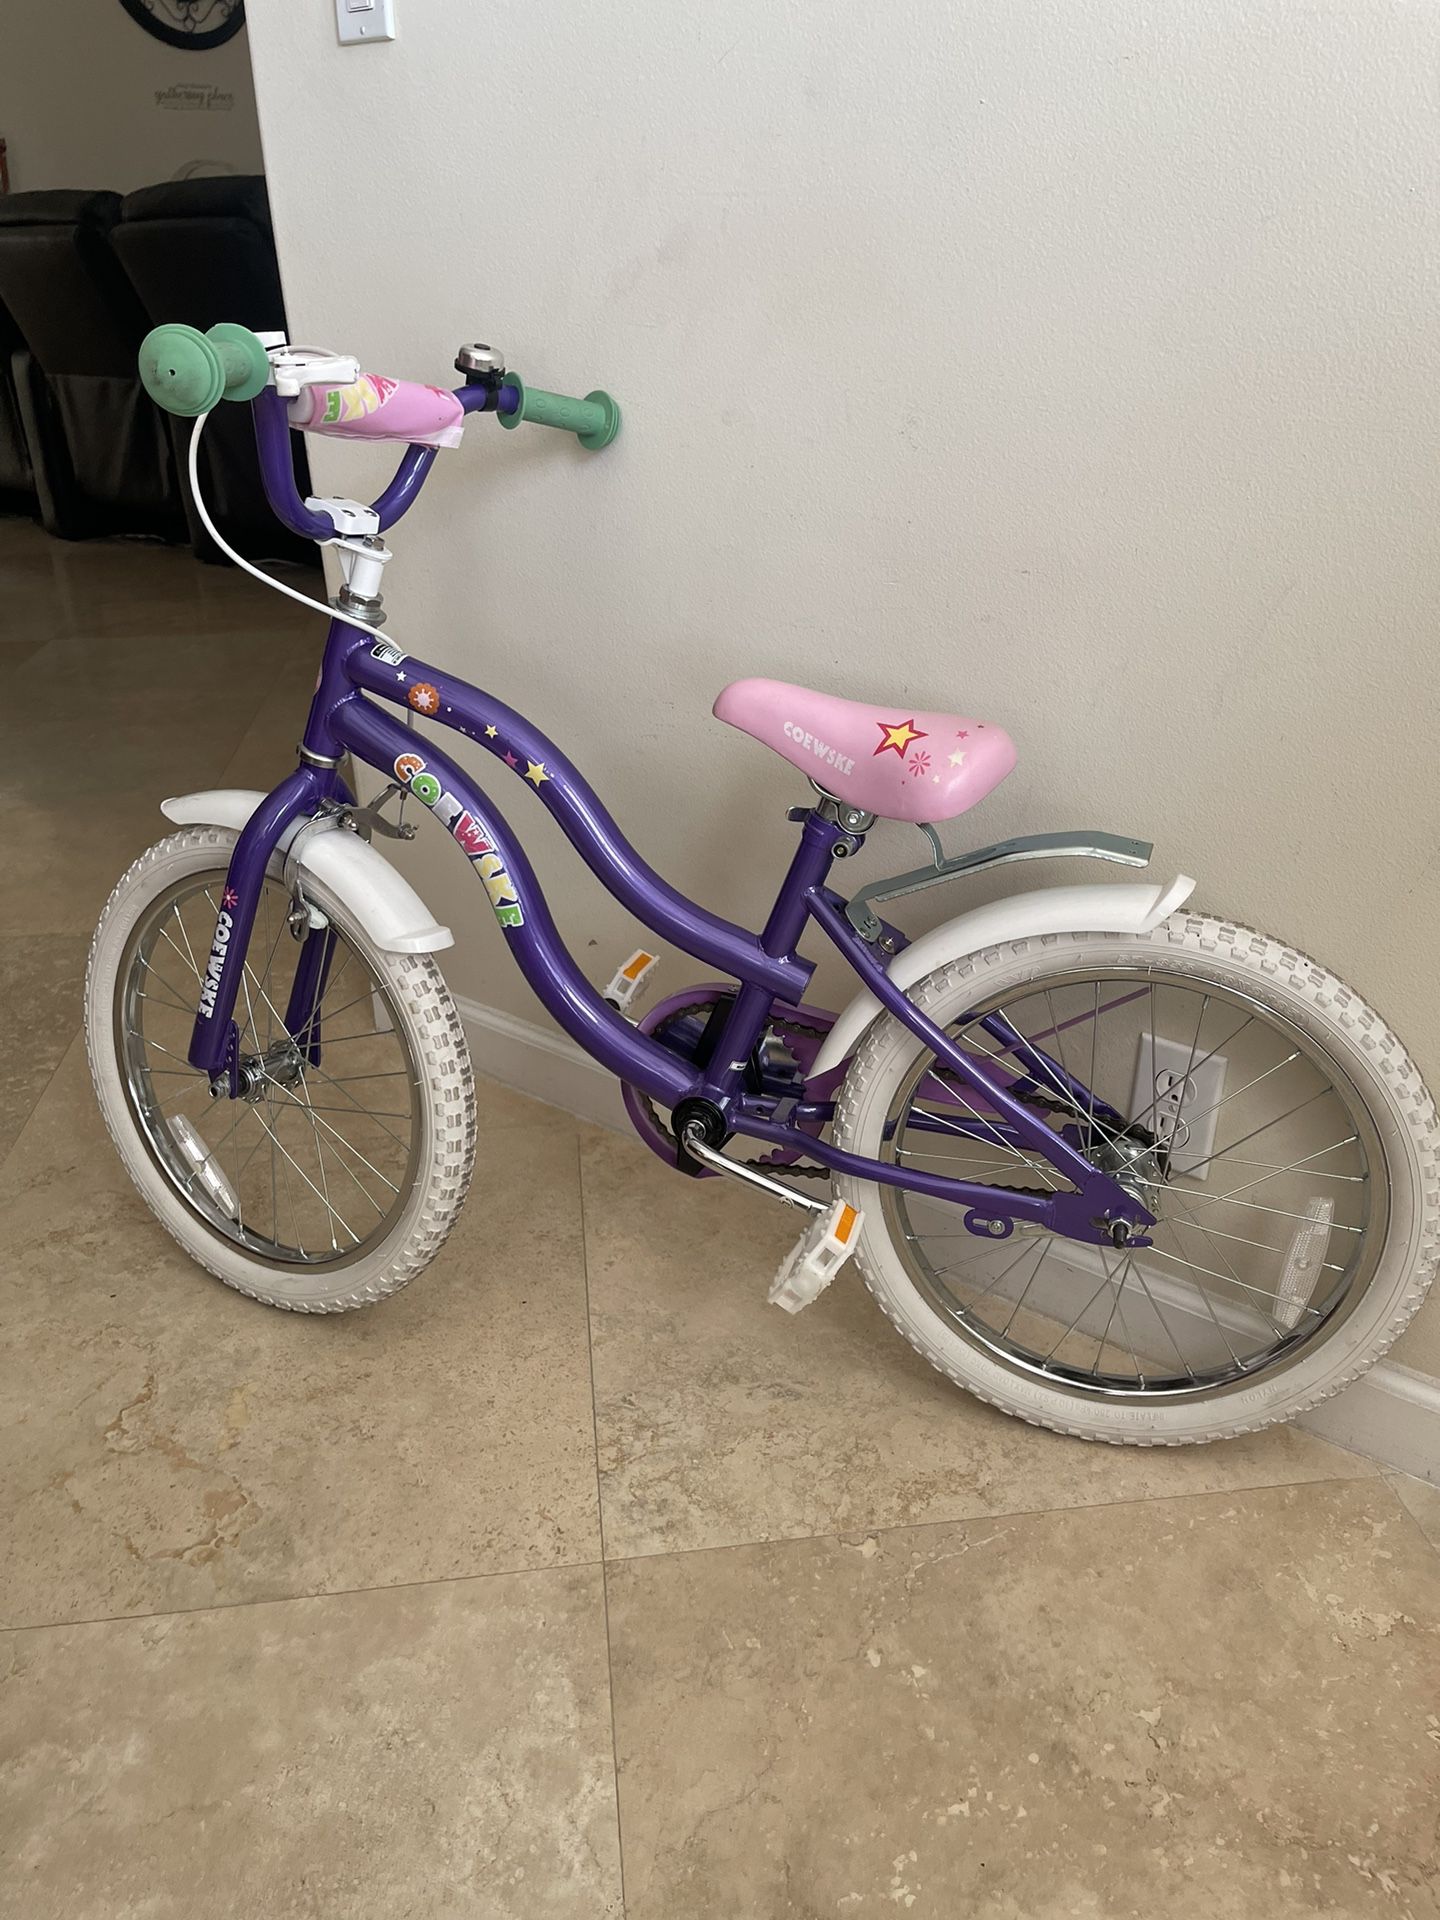 Coewske  Kids Bicycle 18” - LIKE NEW